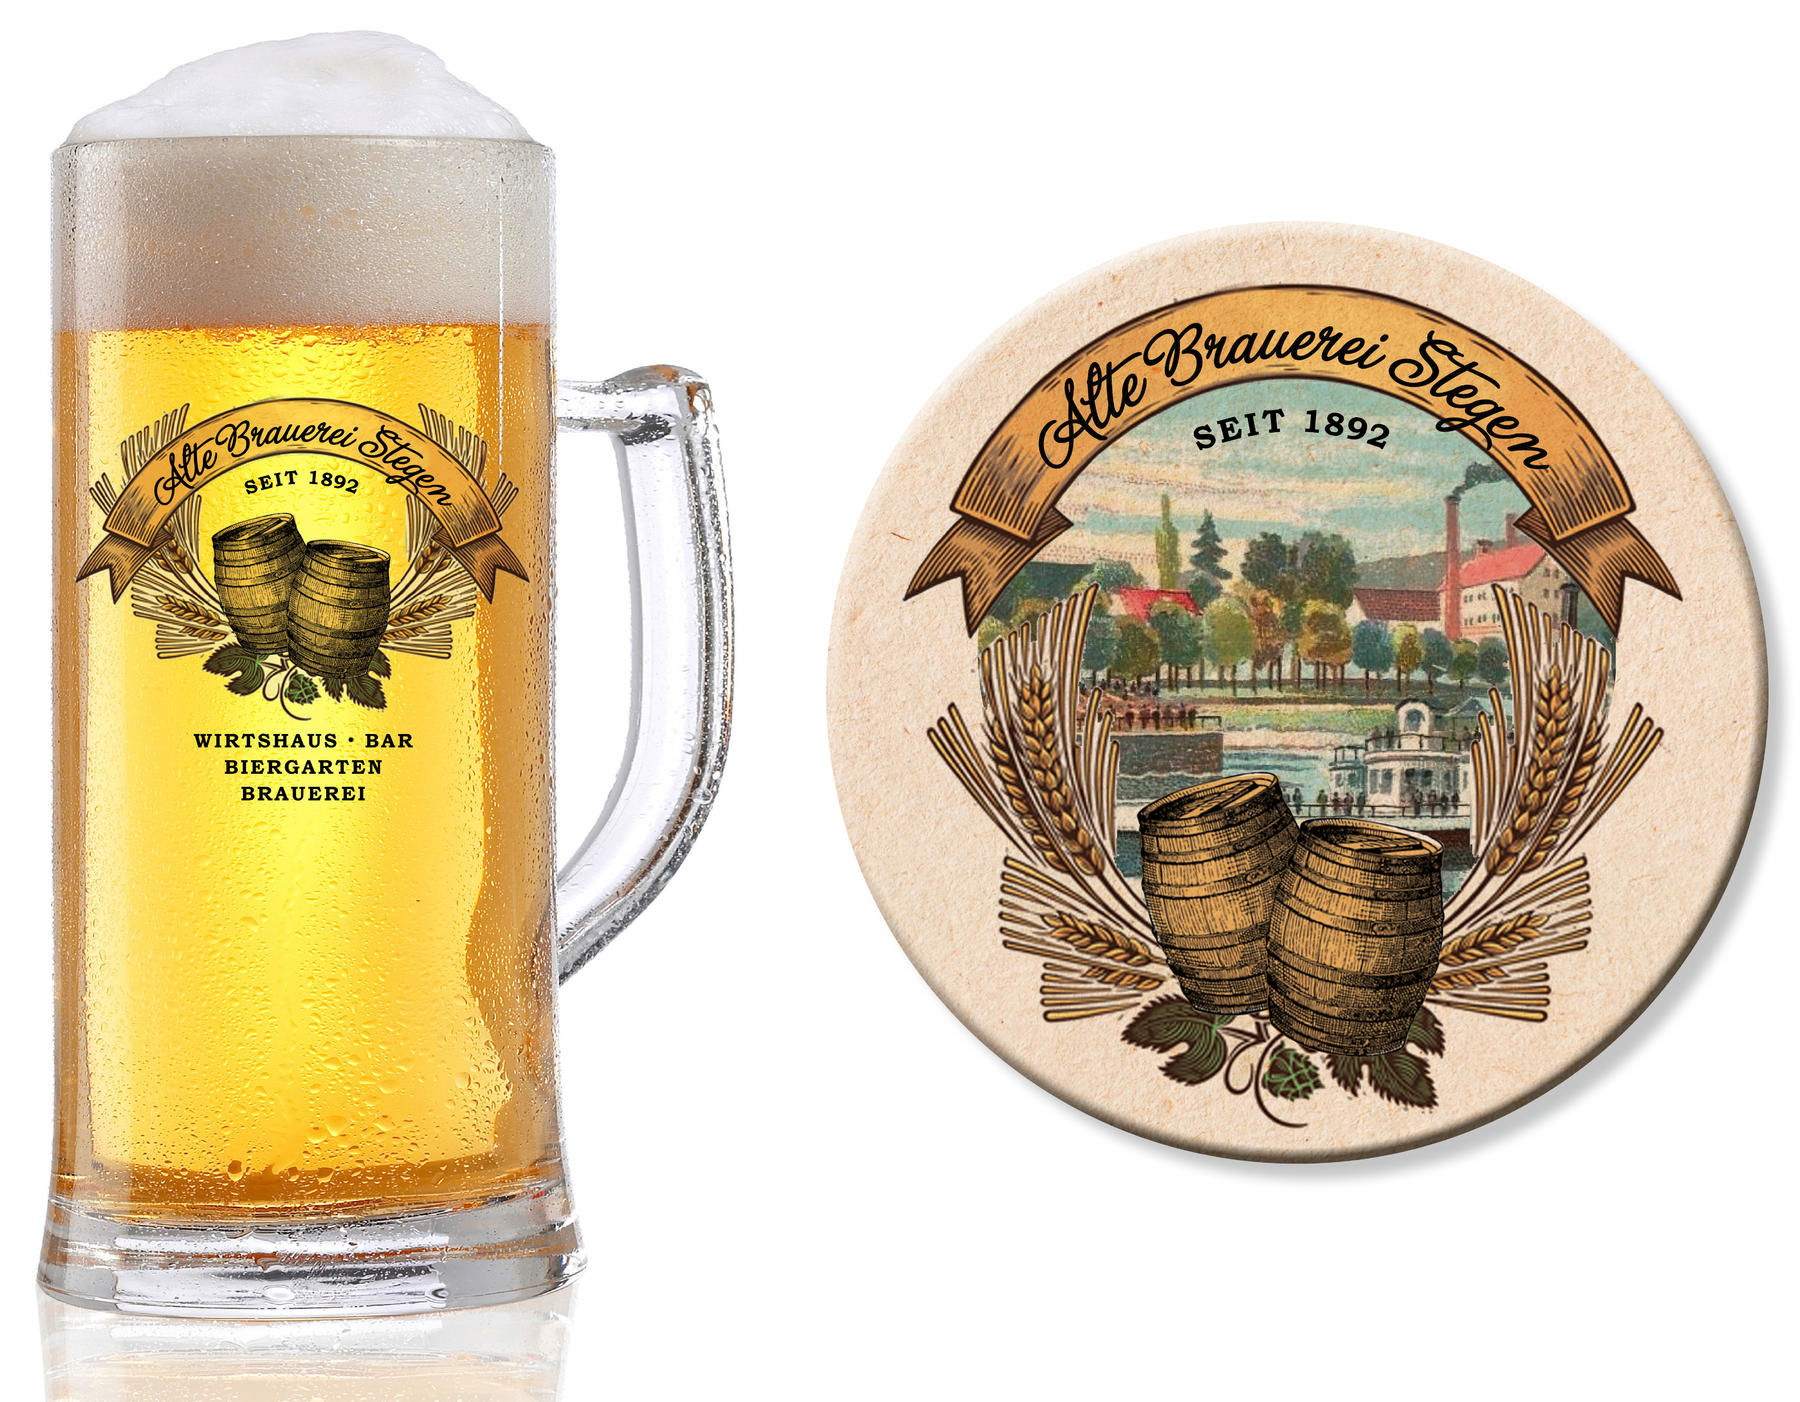 Alte Brauerei Stegen, Corporate Design